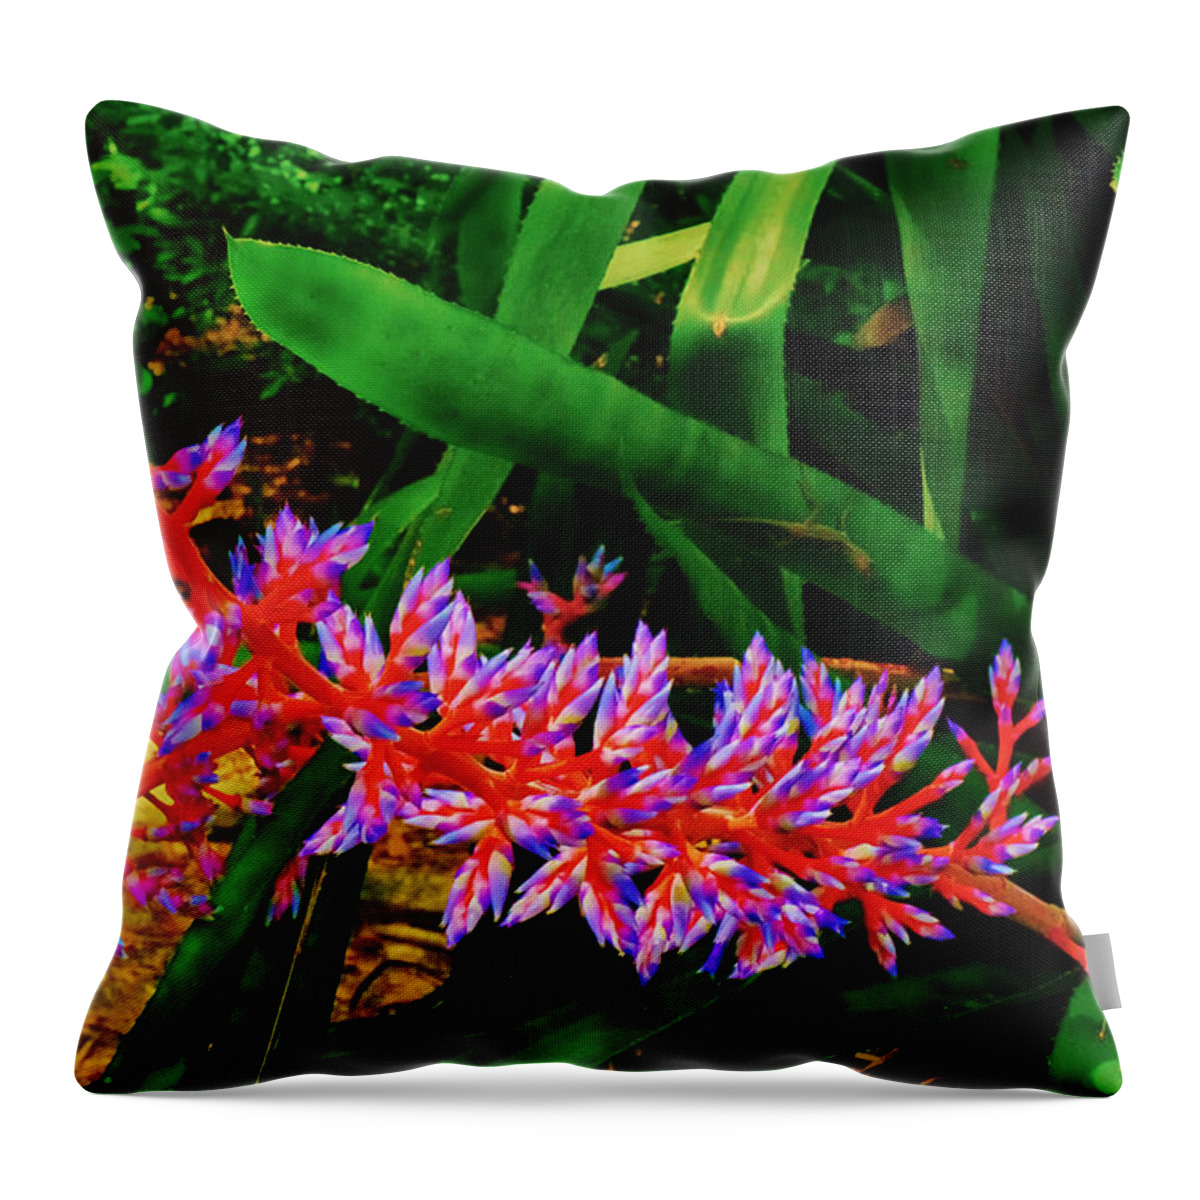 Light Throw Pillow featuring the photograph Tropical Flower by Amanda Jones